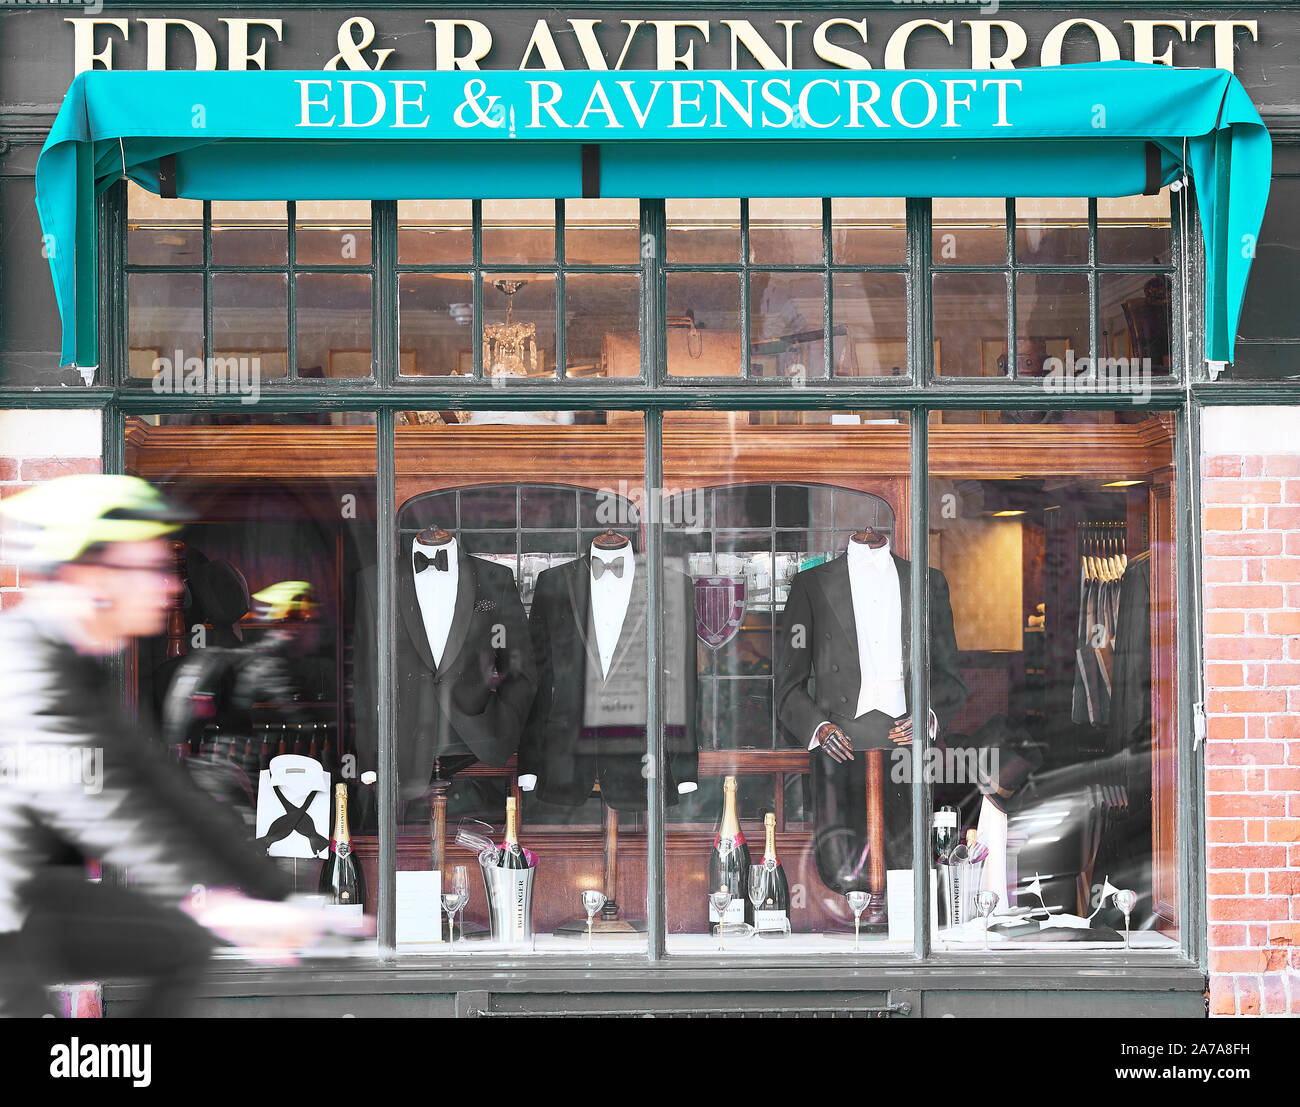 Shop window of Ede & Ravenscroft at Cambridge, England Stock Photo - Alamy